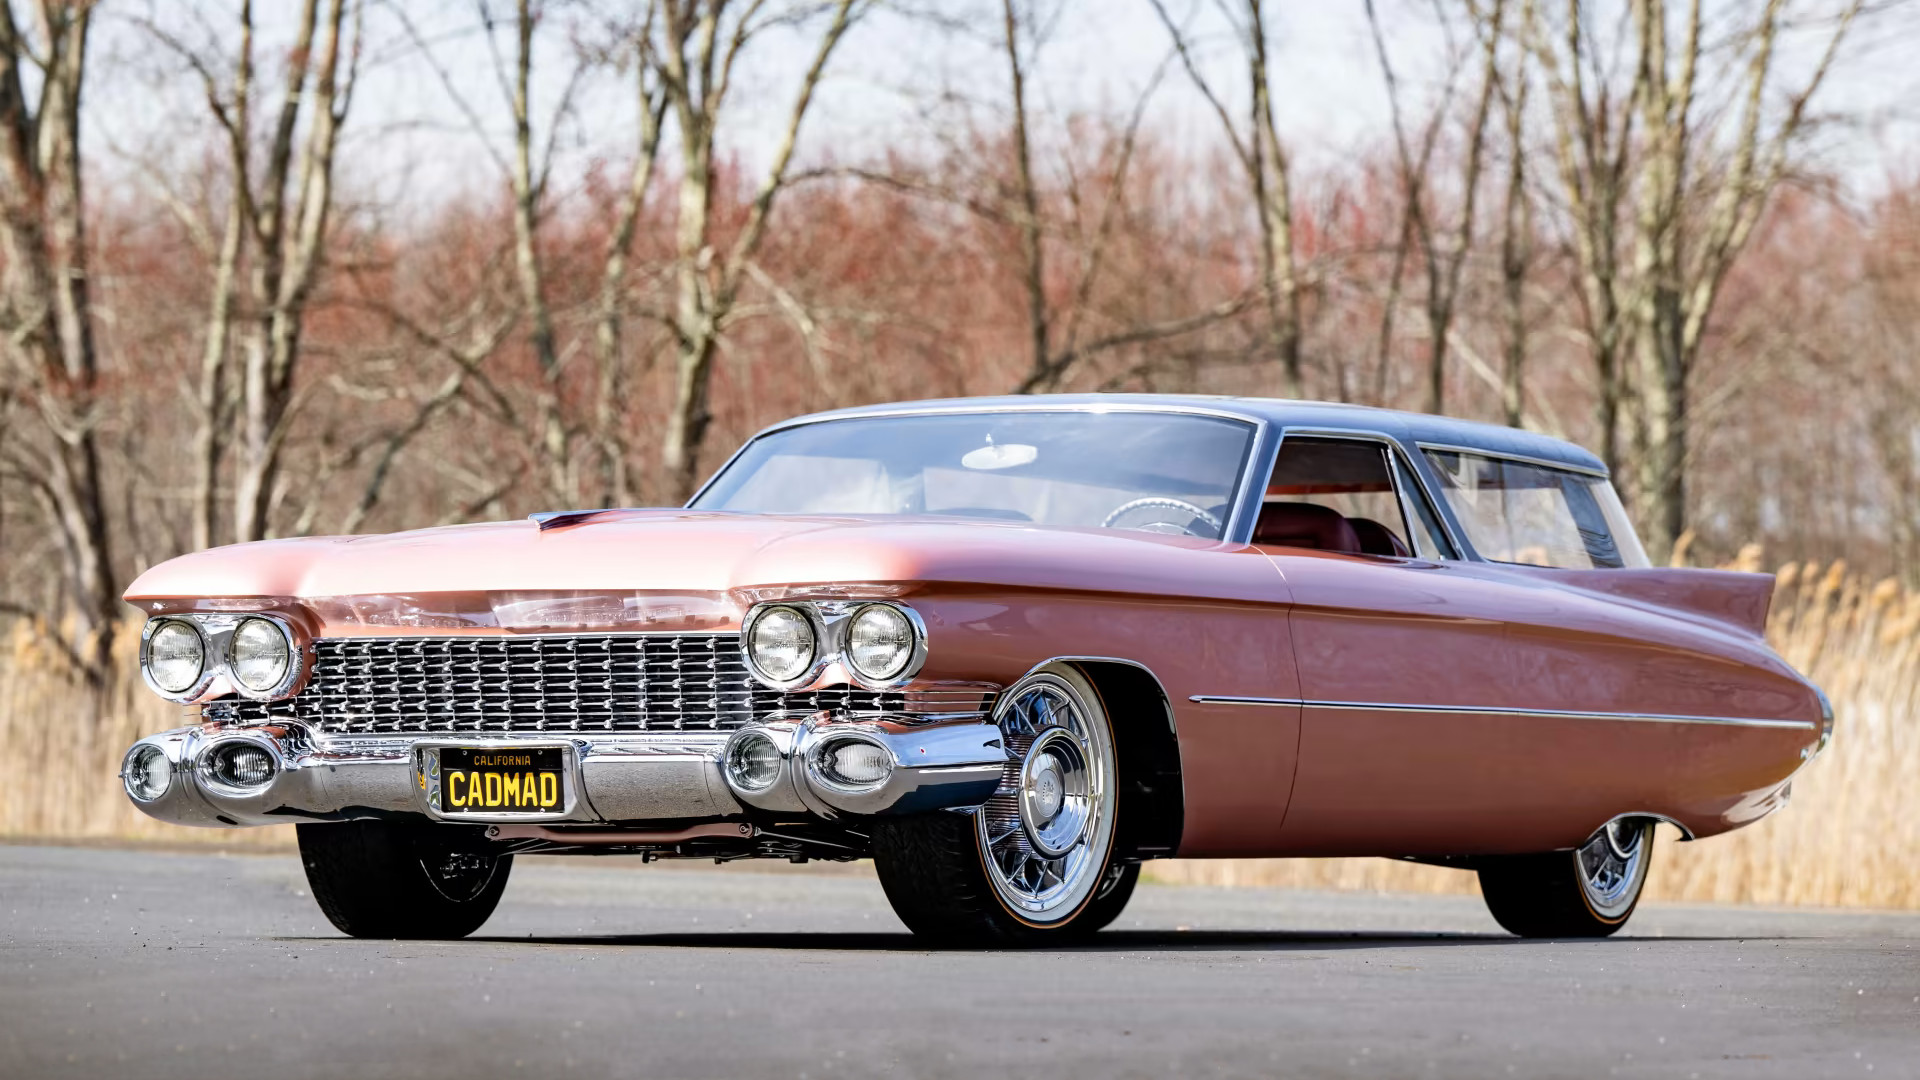 Crazy 1959 Cadillac Kustom Makes 1,000 HP and Looks Freakin’ Sweet